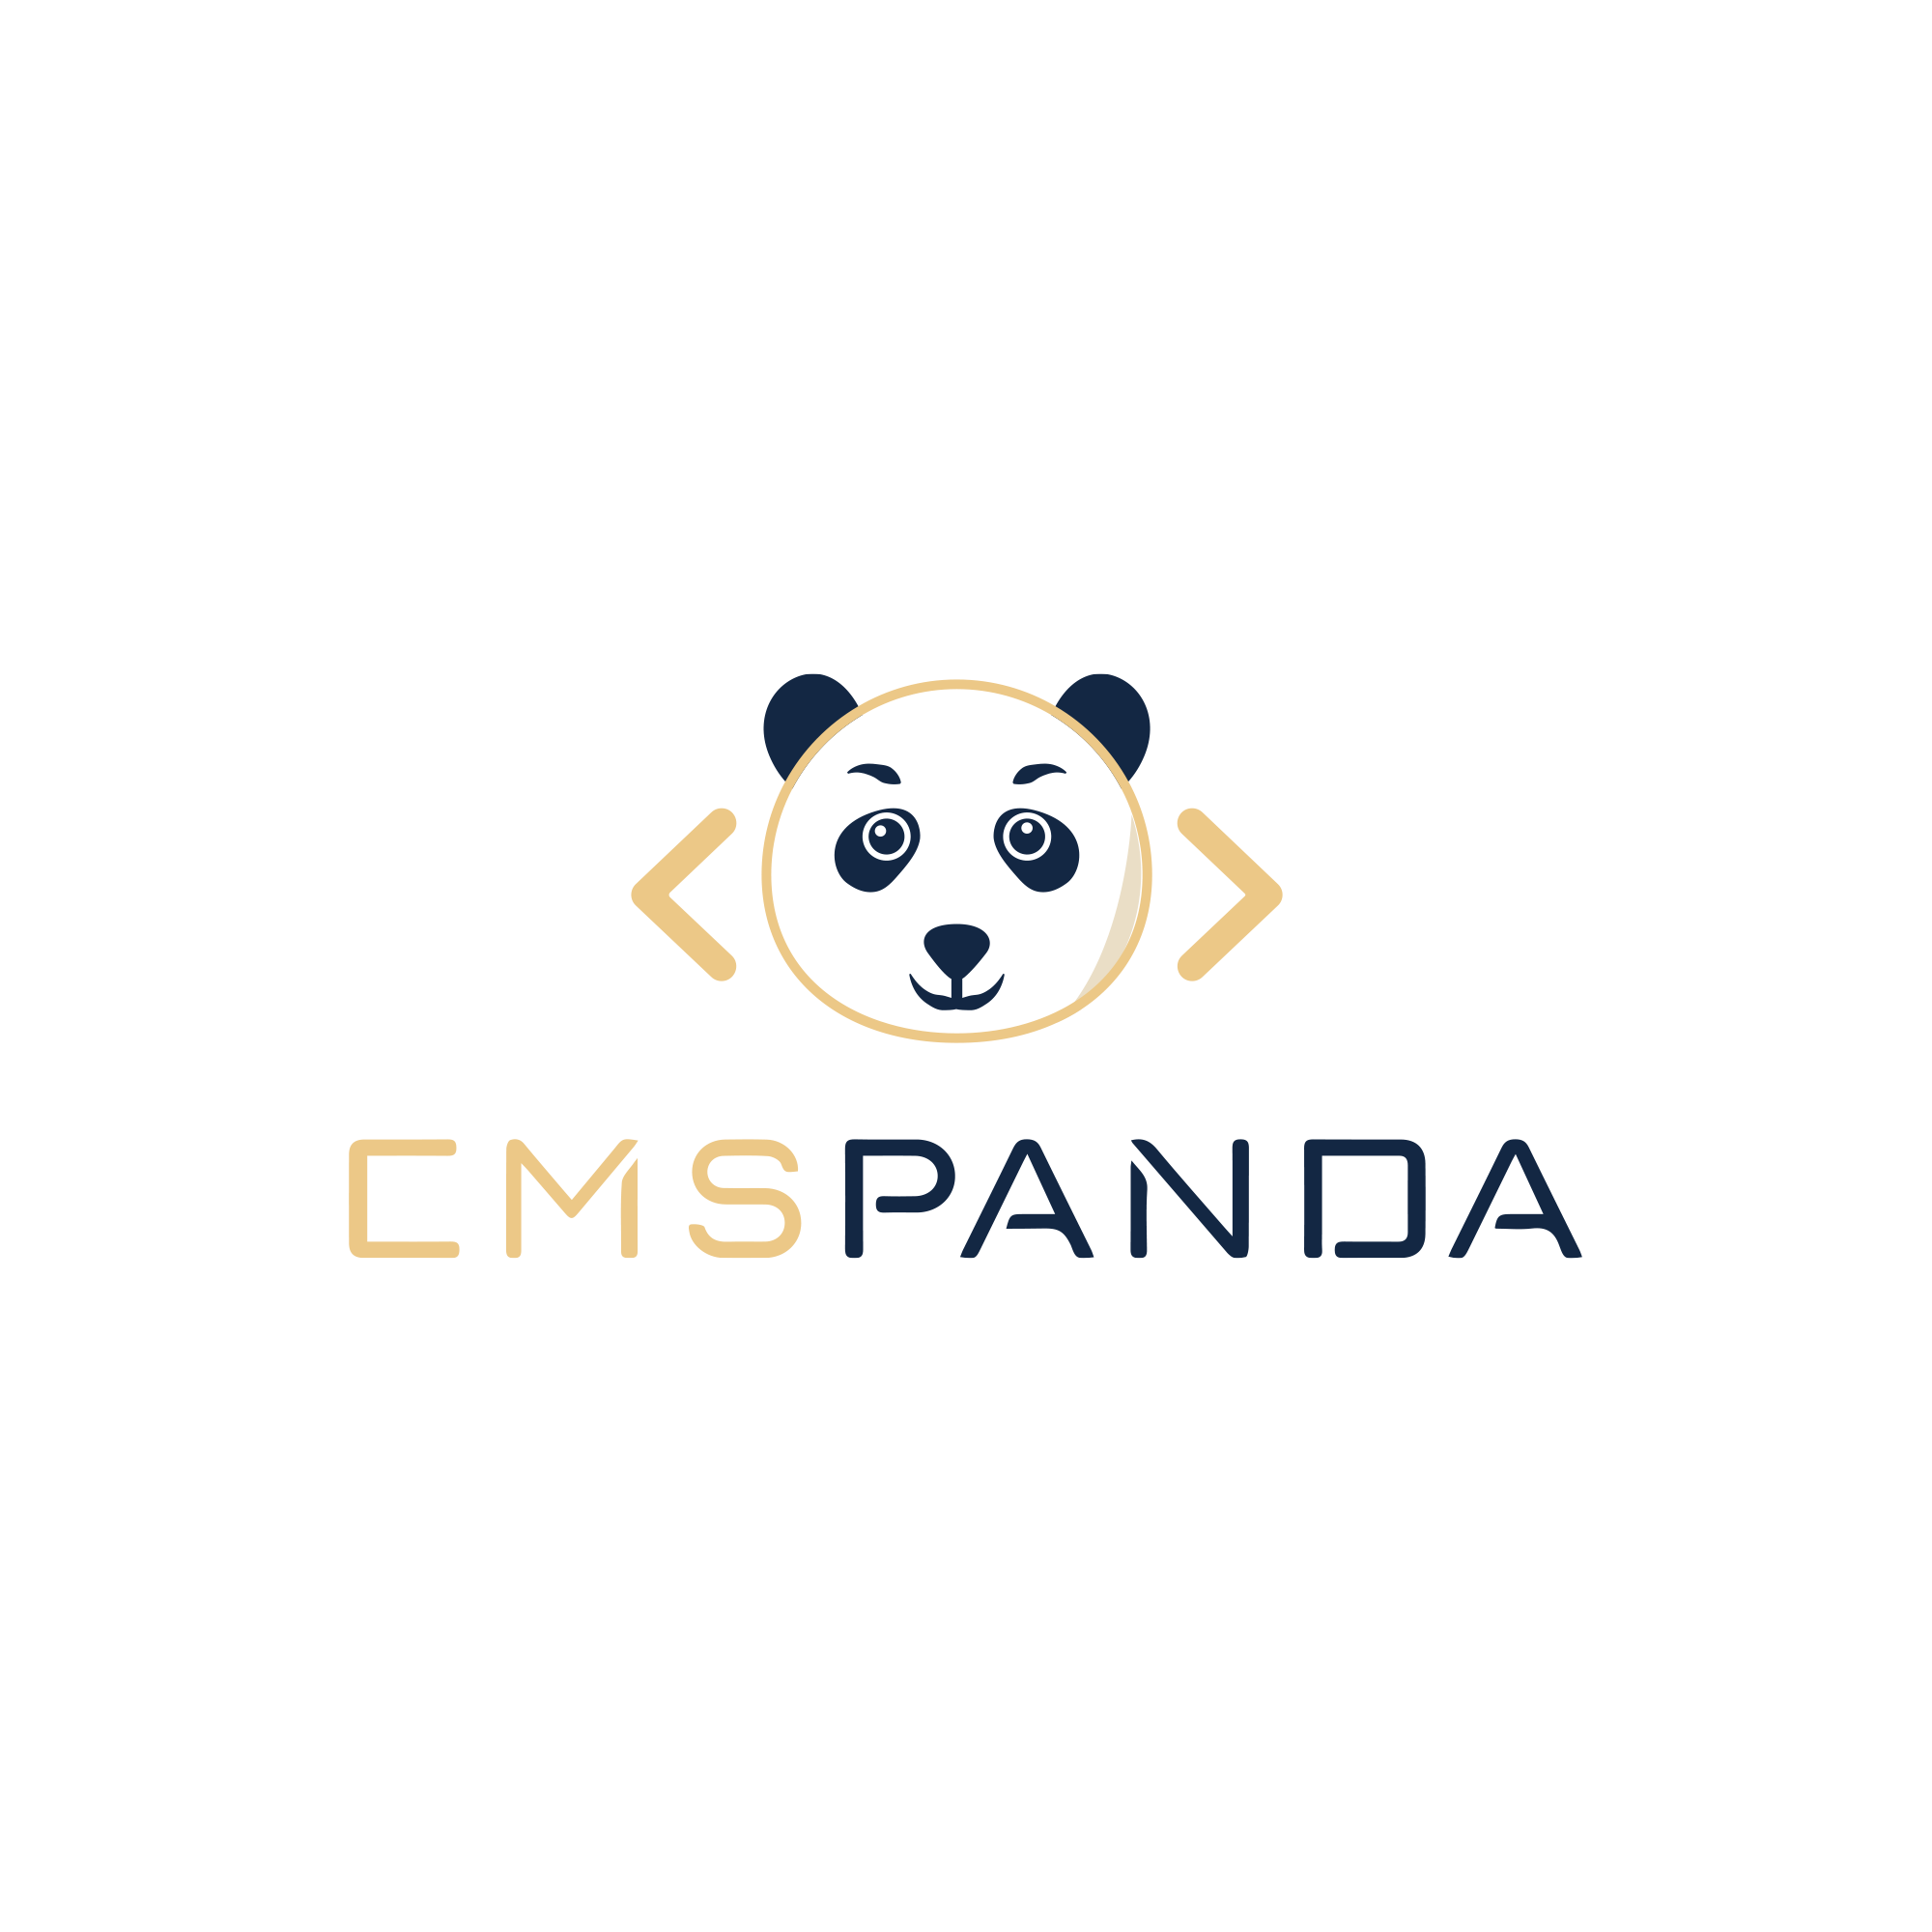 The CMS Panda logo